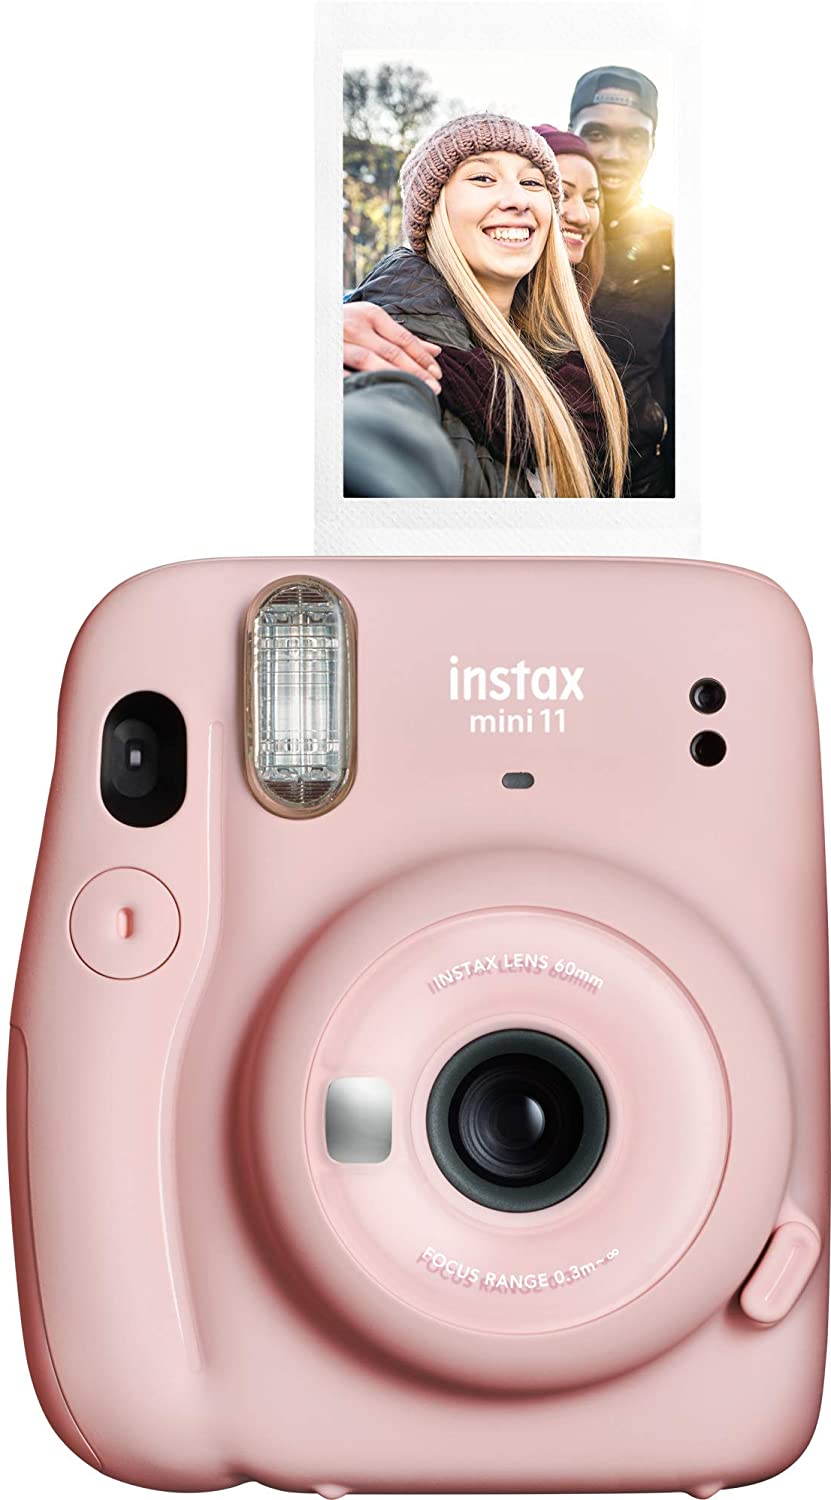 Fujifilm Instax Mini 11 - Instant camera blush pink - image 1 of 1